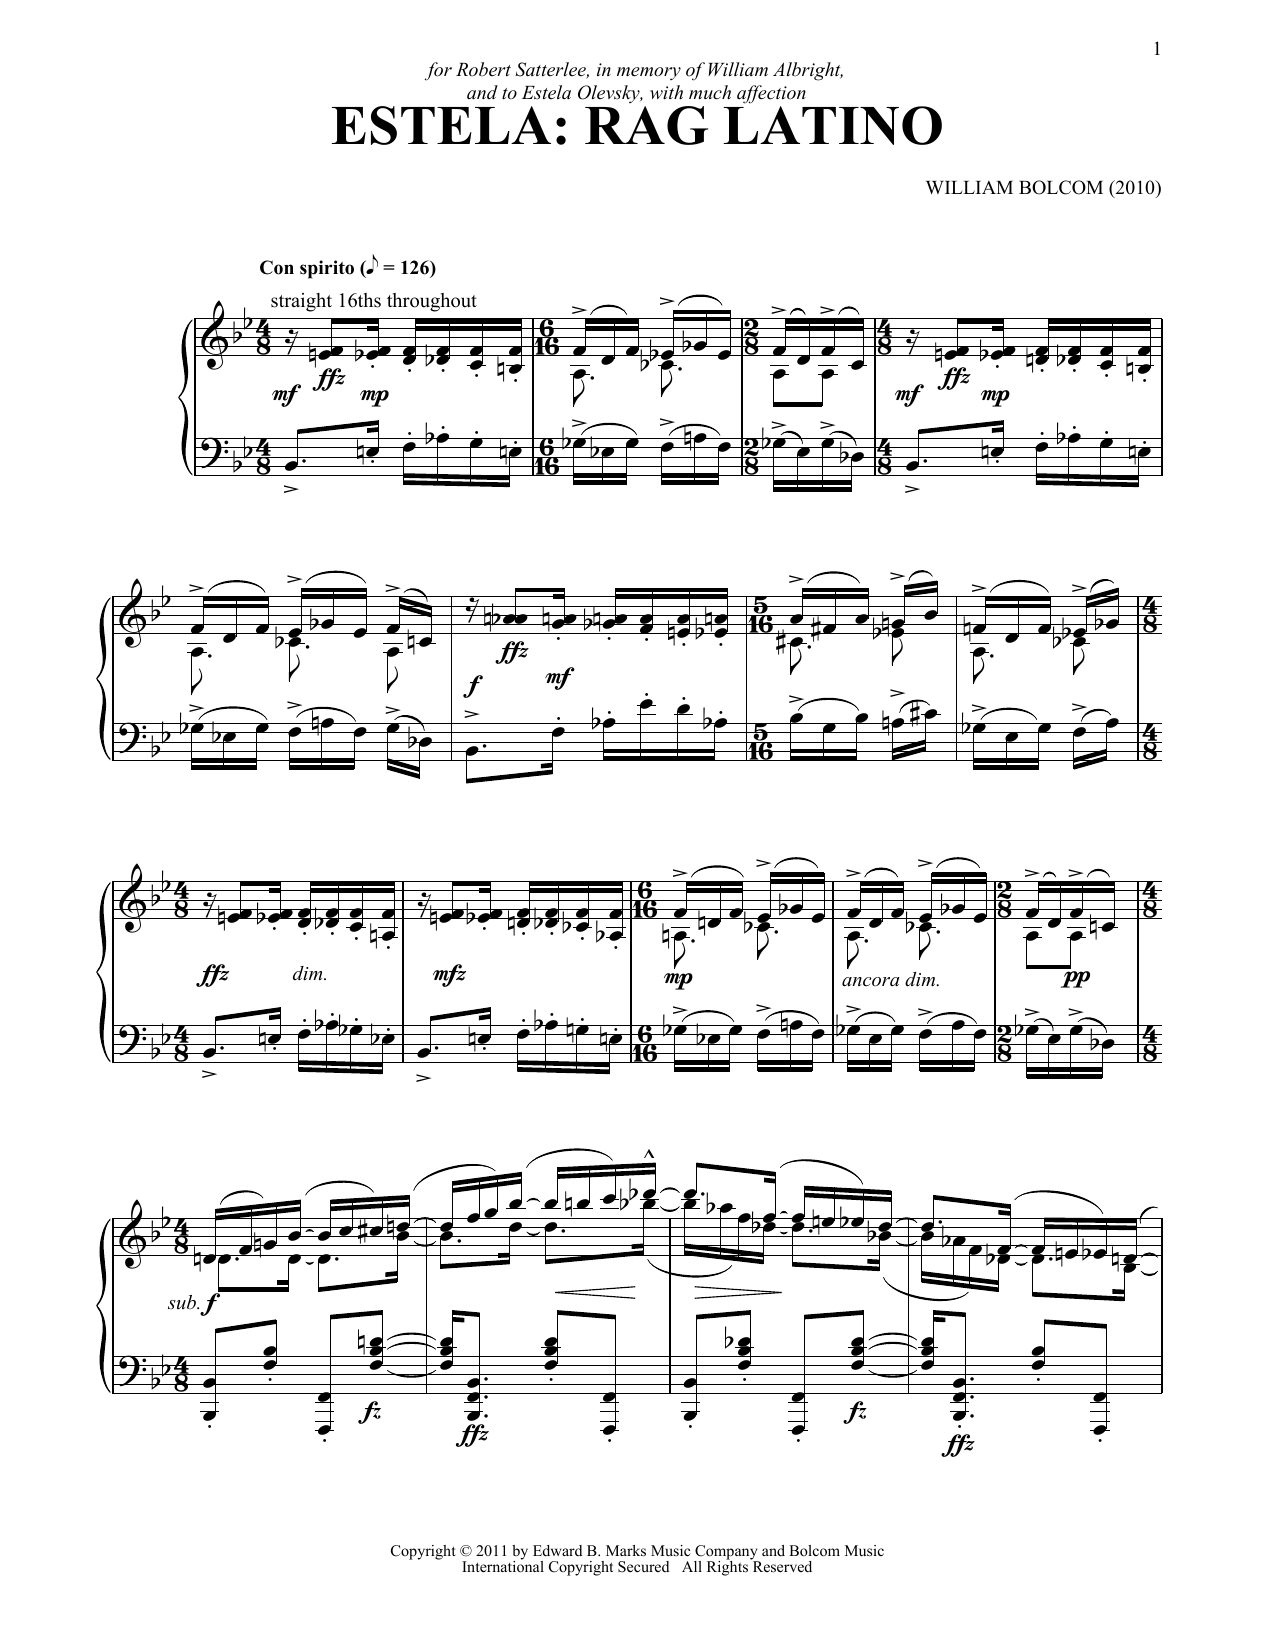 William Bolcom Estela: Rag Latino Sheet Music Notes & Chords for Piano - Download or Print PDF